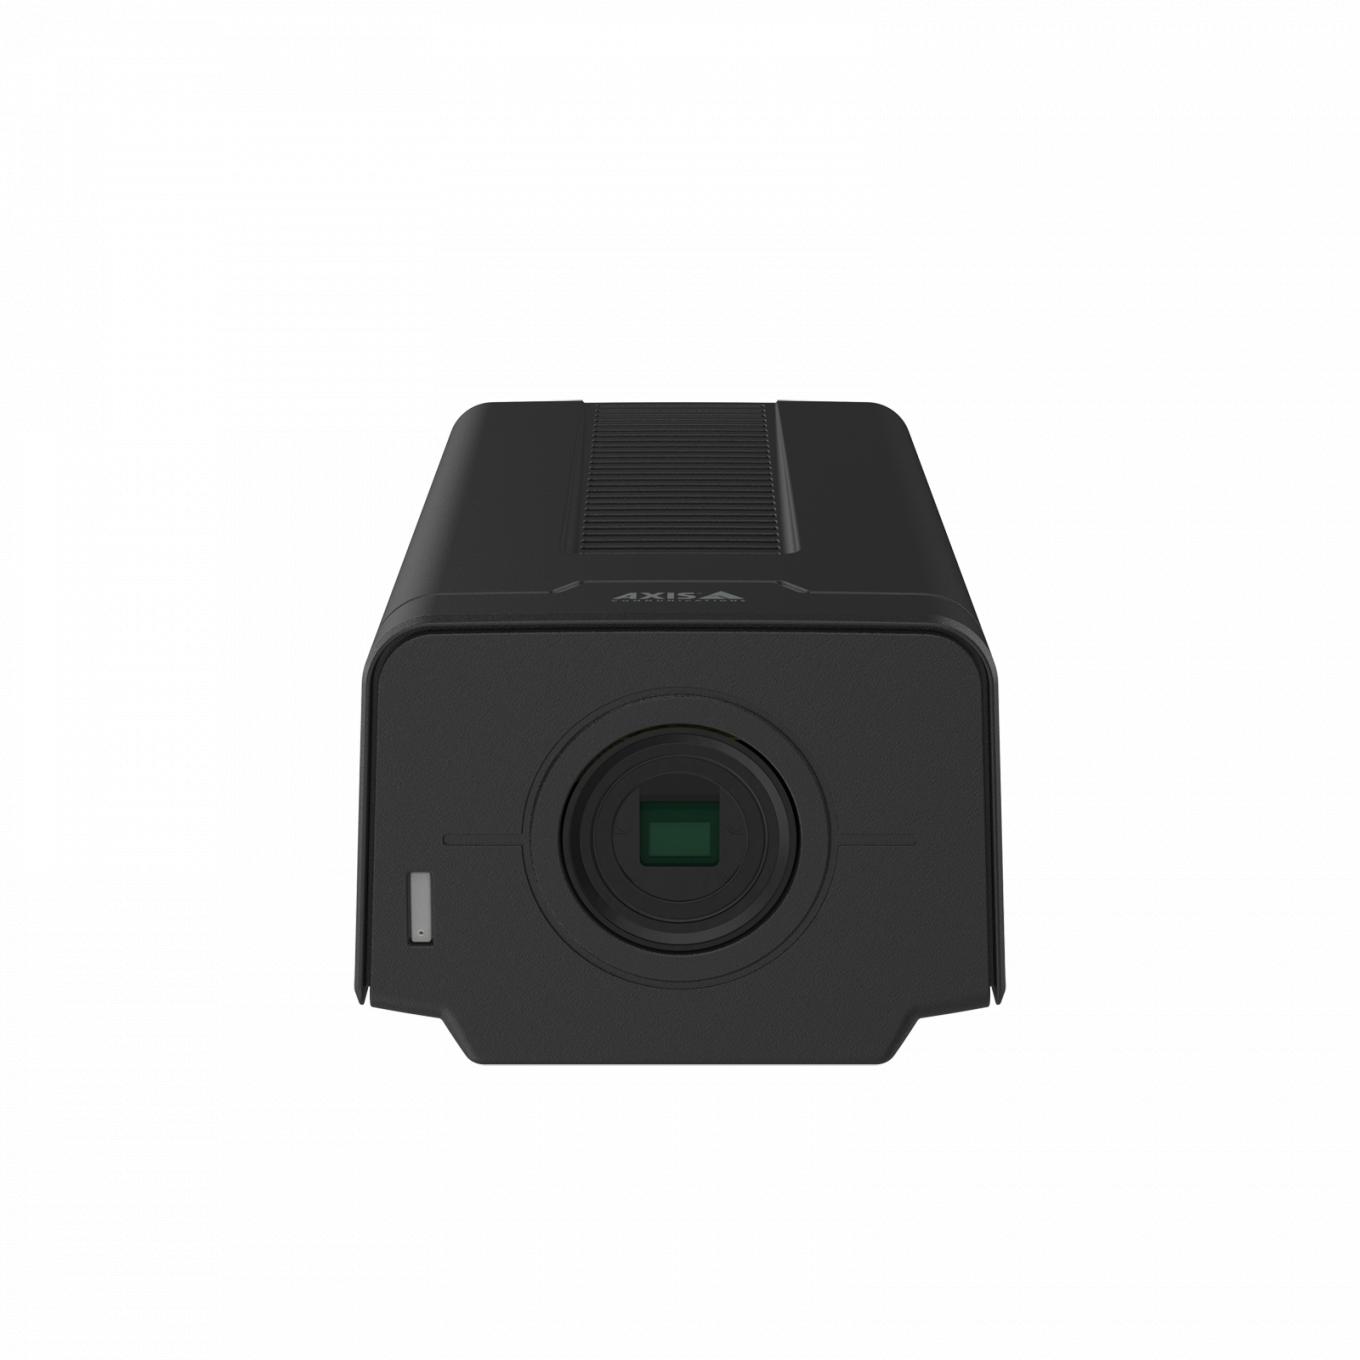 AXIS Q1656-B Box Camera、正面から見た図